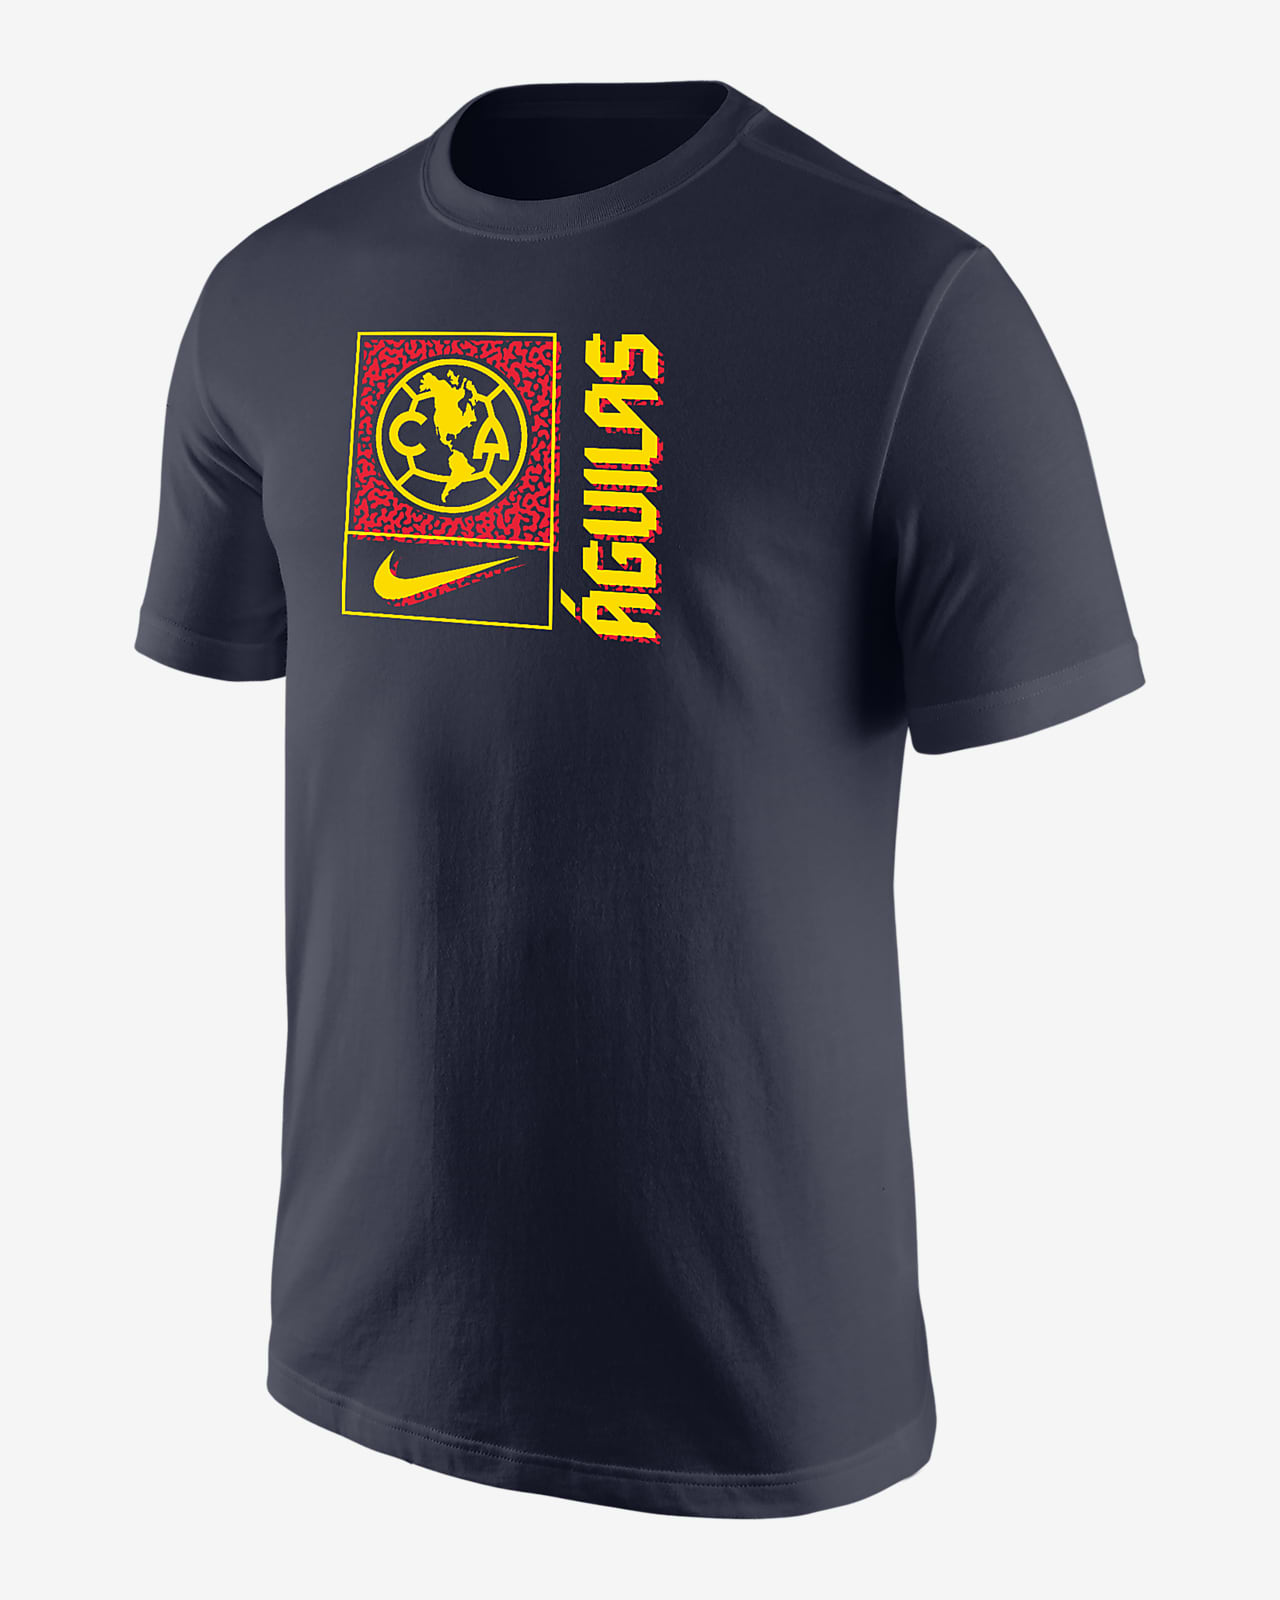 Club América Men's Nike Soccer T-Shirt